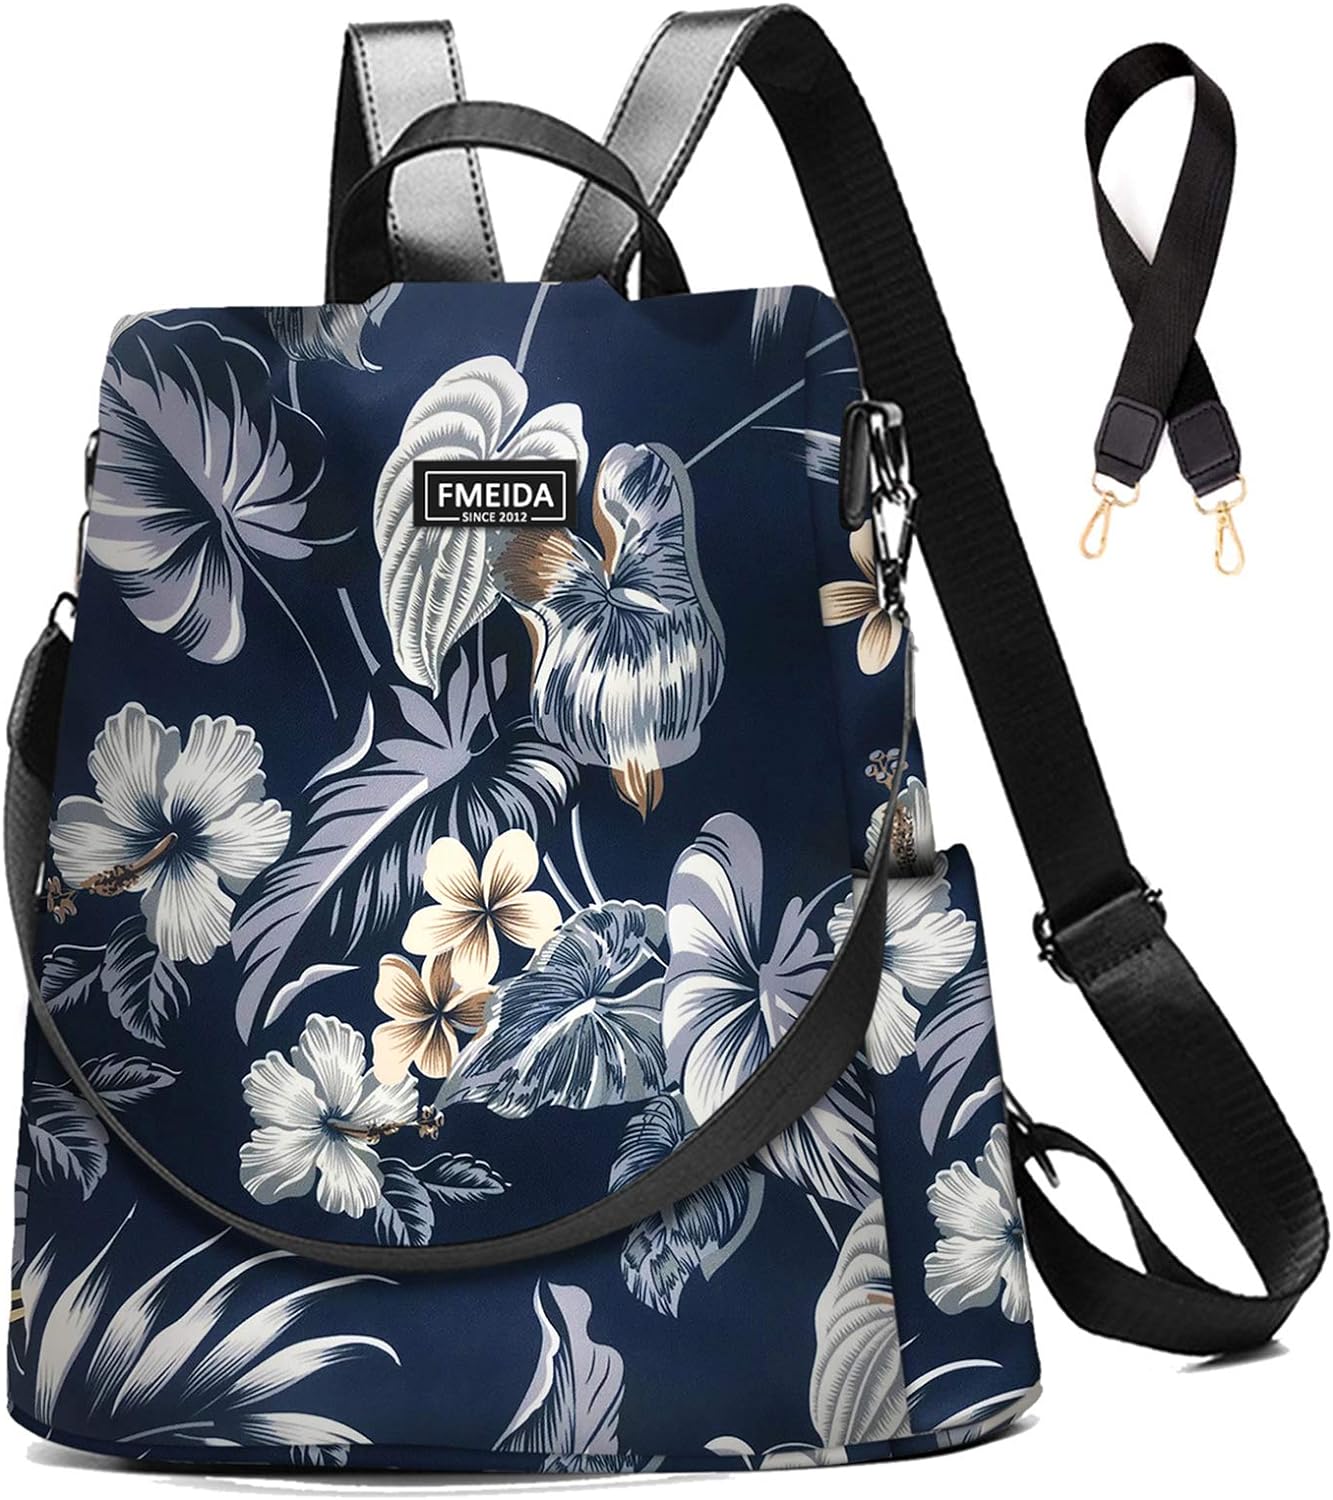 Fmeida Anti-Theft Backpack for Women, Waterproof Nylon Daypack Shoulder Bag Ladies Rucksack Handbags Lightweight Travel Bag School Bags Fashion Casual Backpacks Purse for Girls